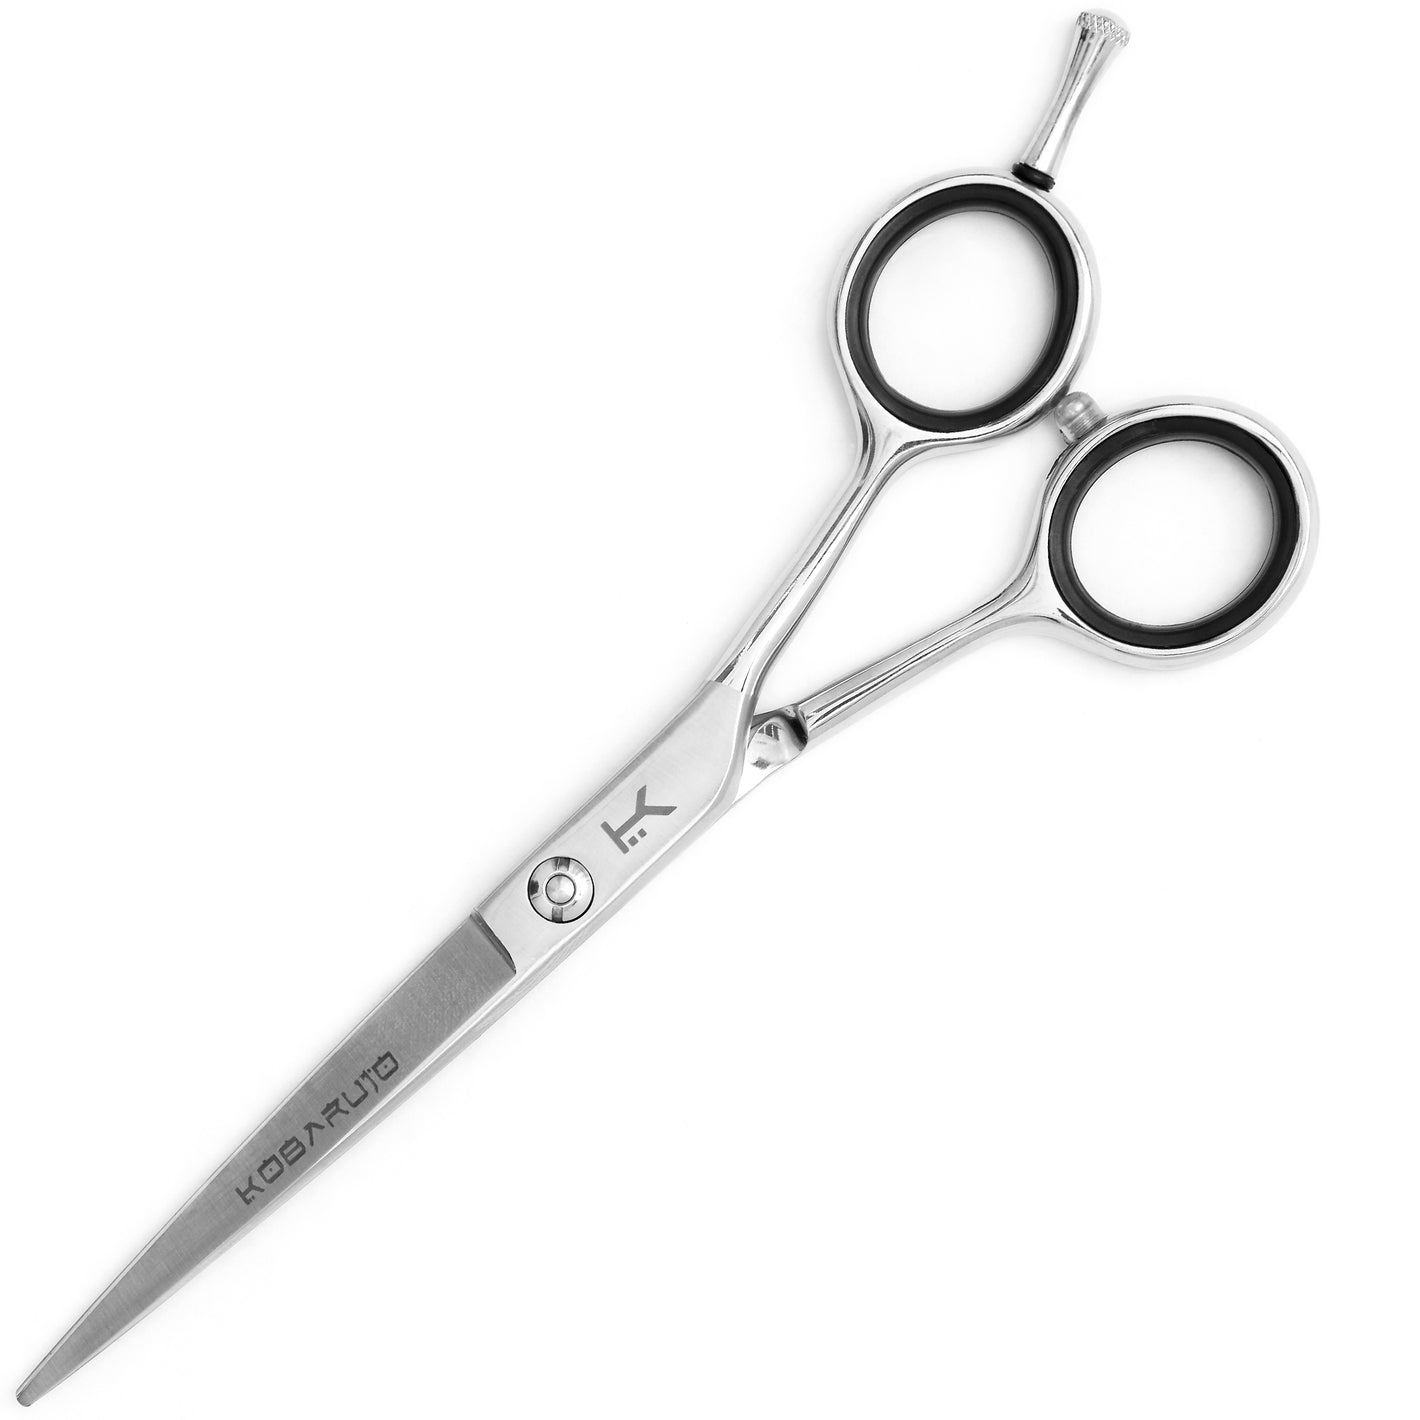 6 Inch Hair Scissors Collection - beautyhair.co.uk